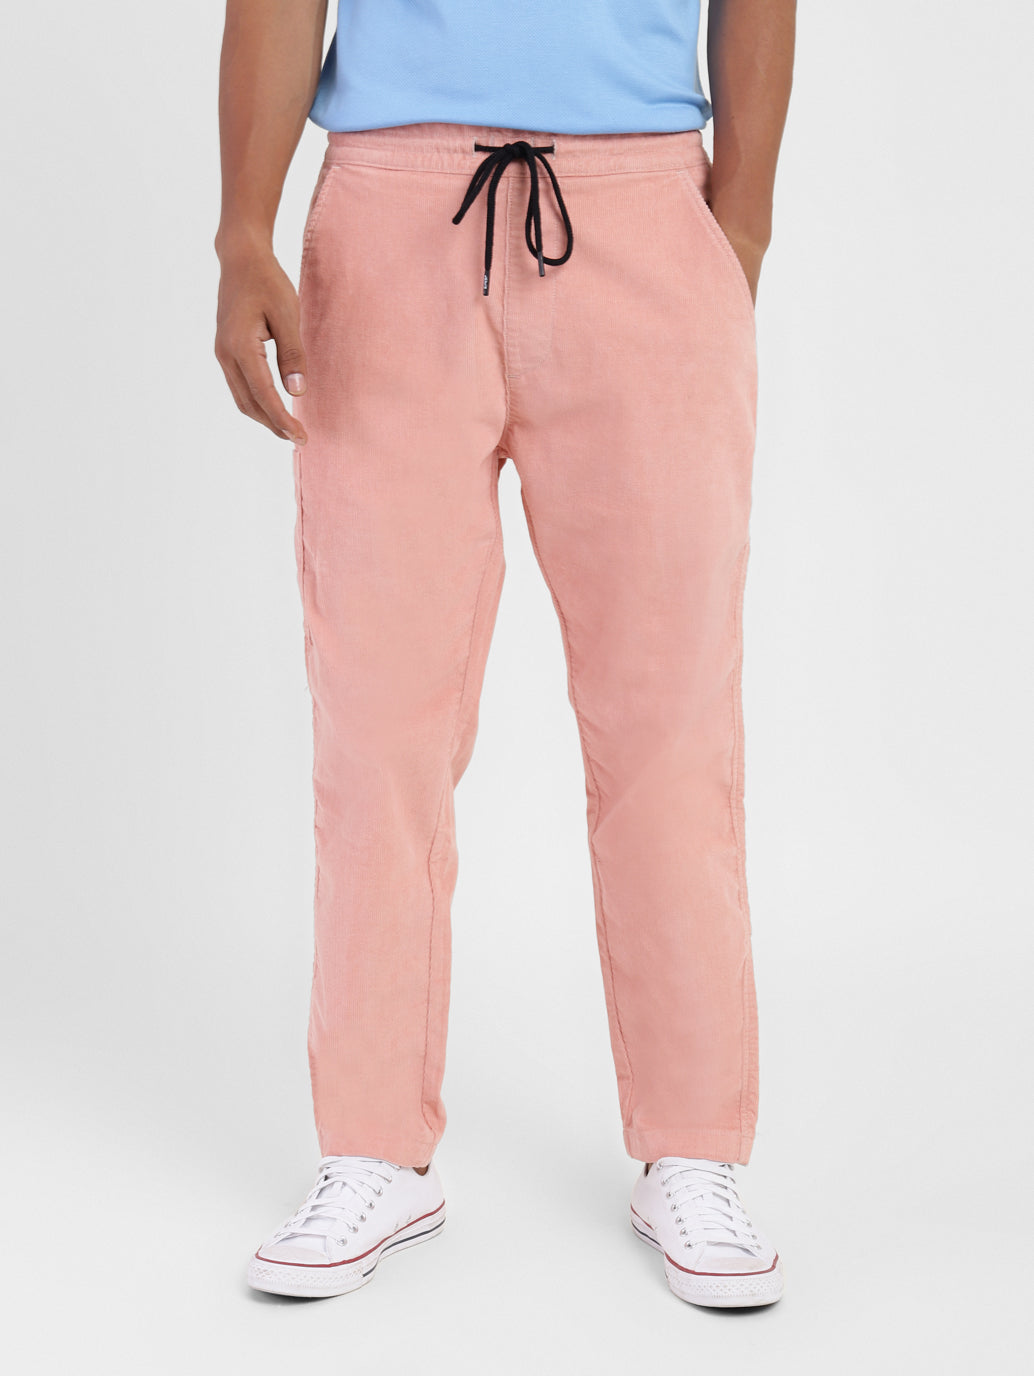 Shop Pants & Trousers for women online – Levis India Store